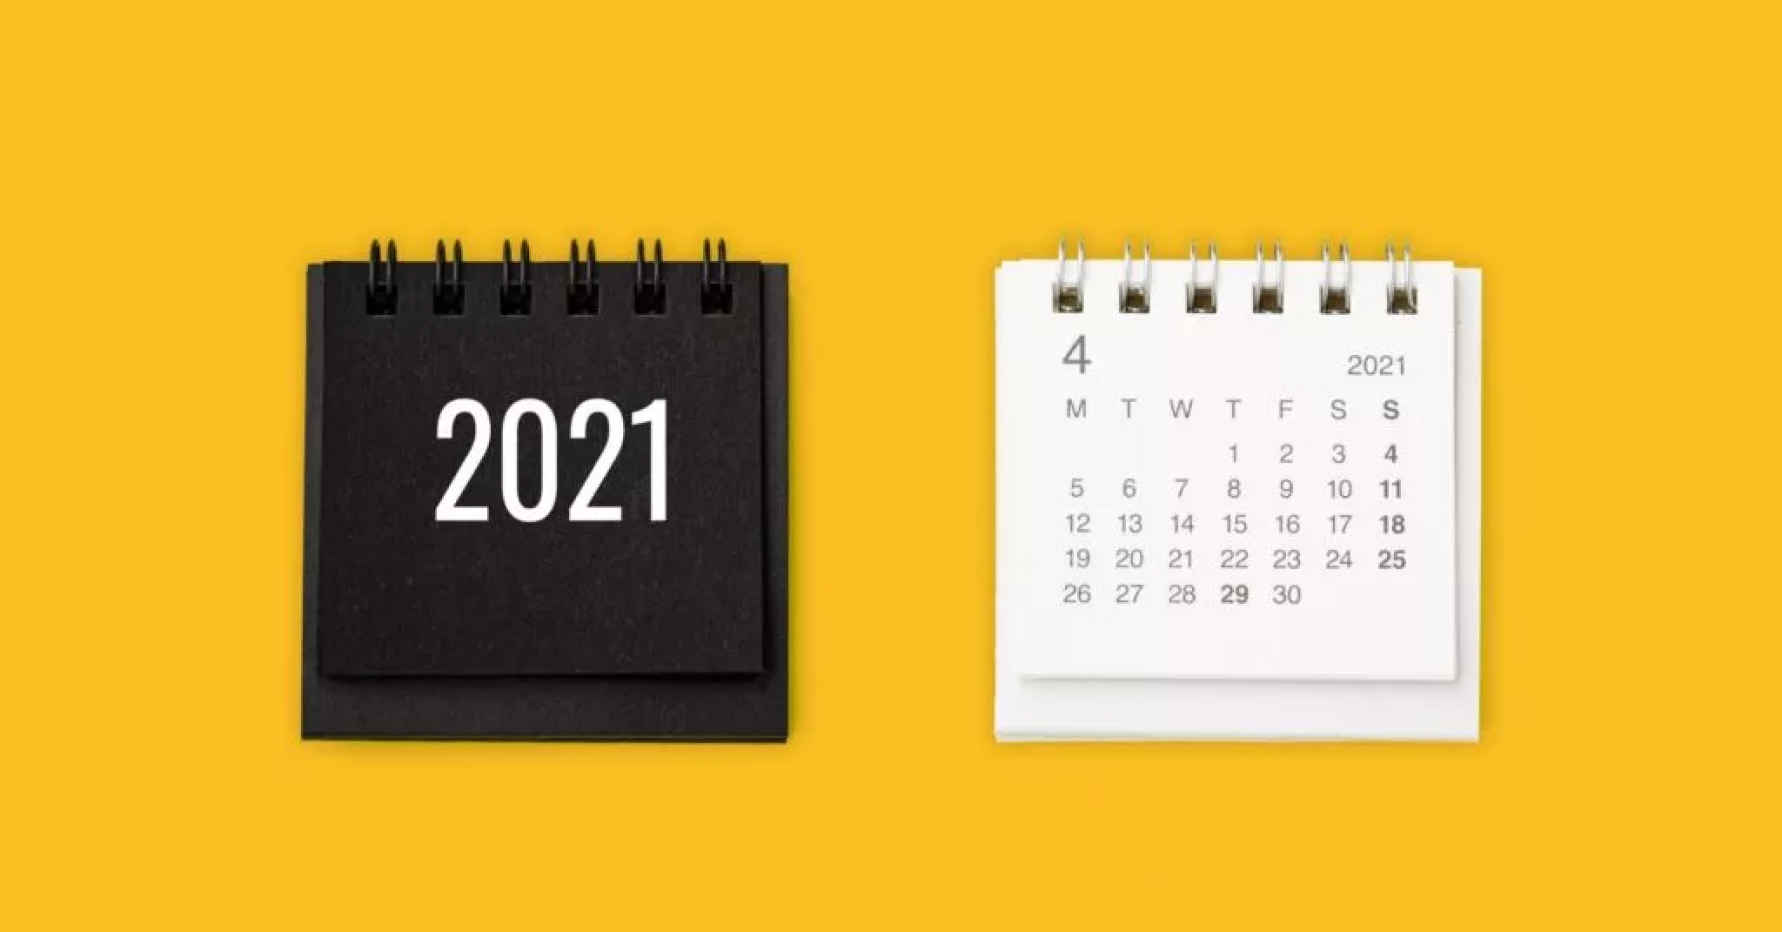 Photograph of a 2021 calendar